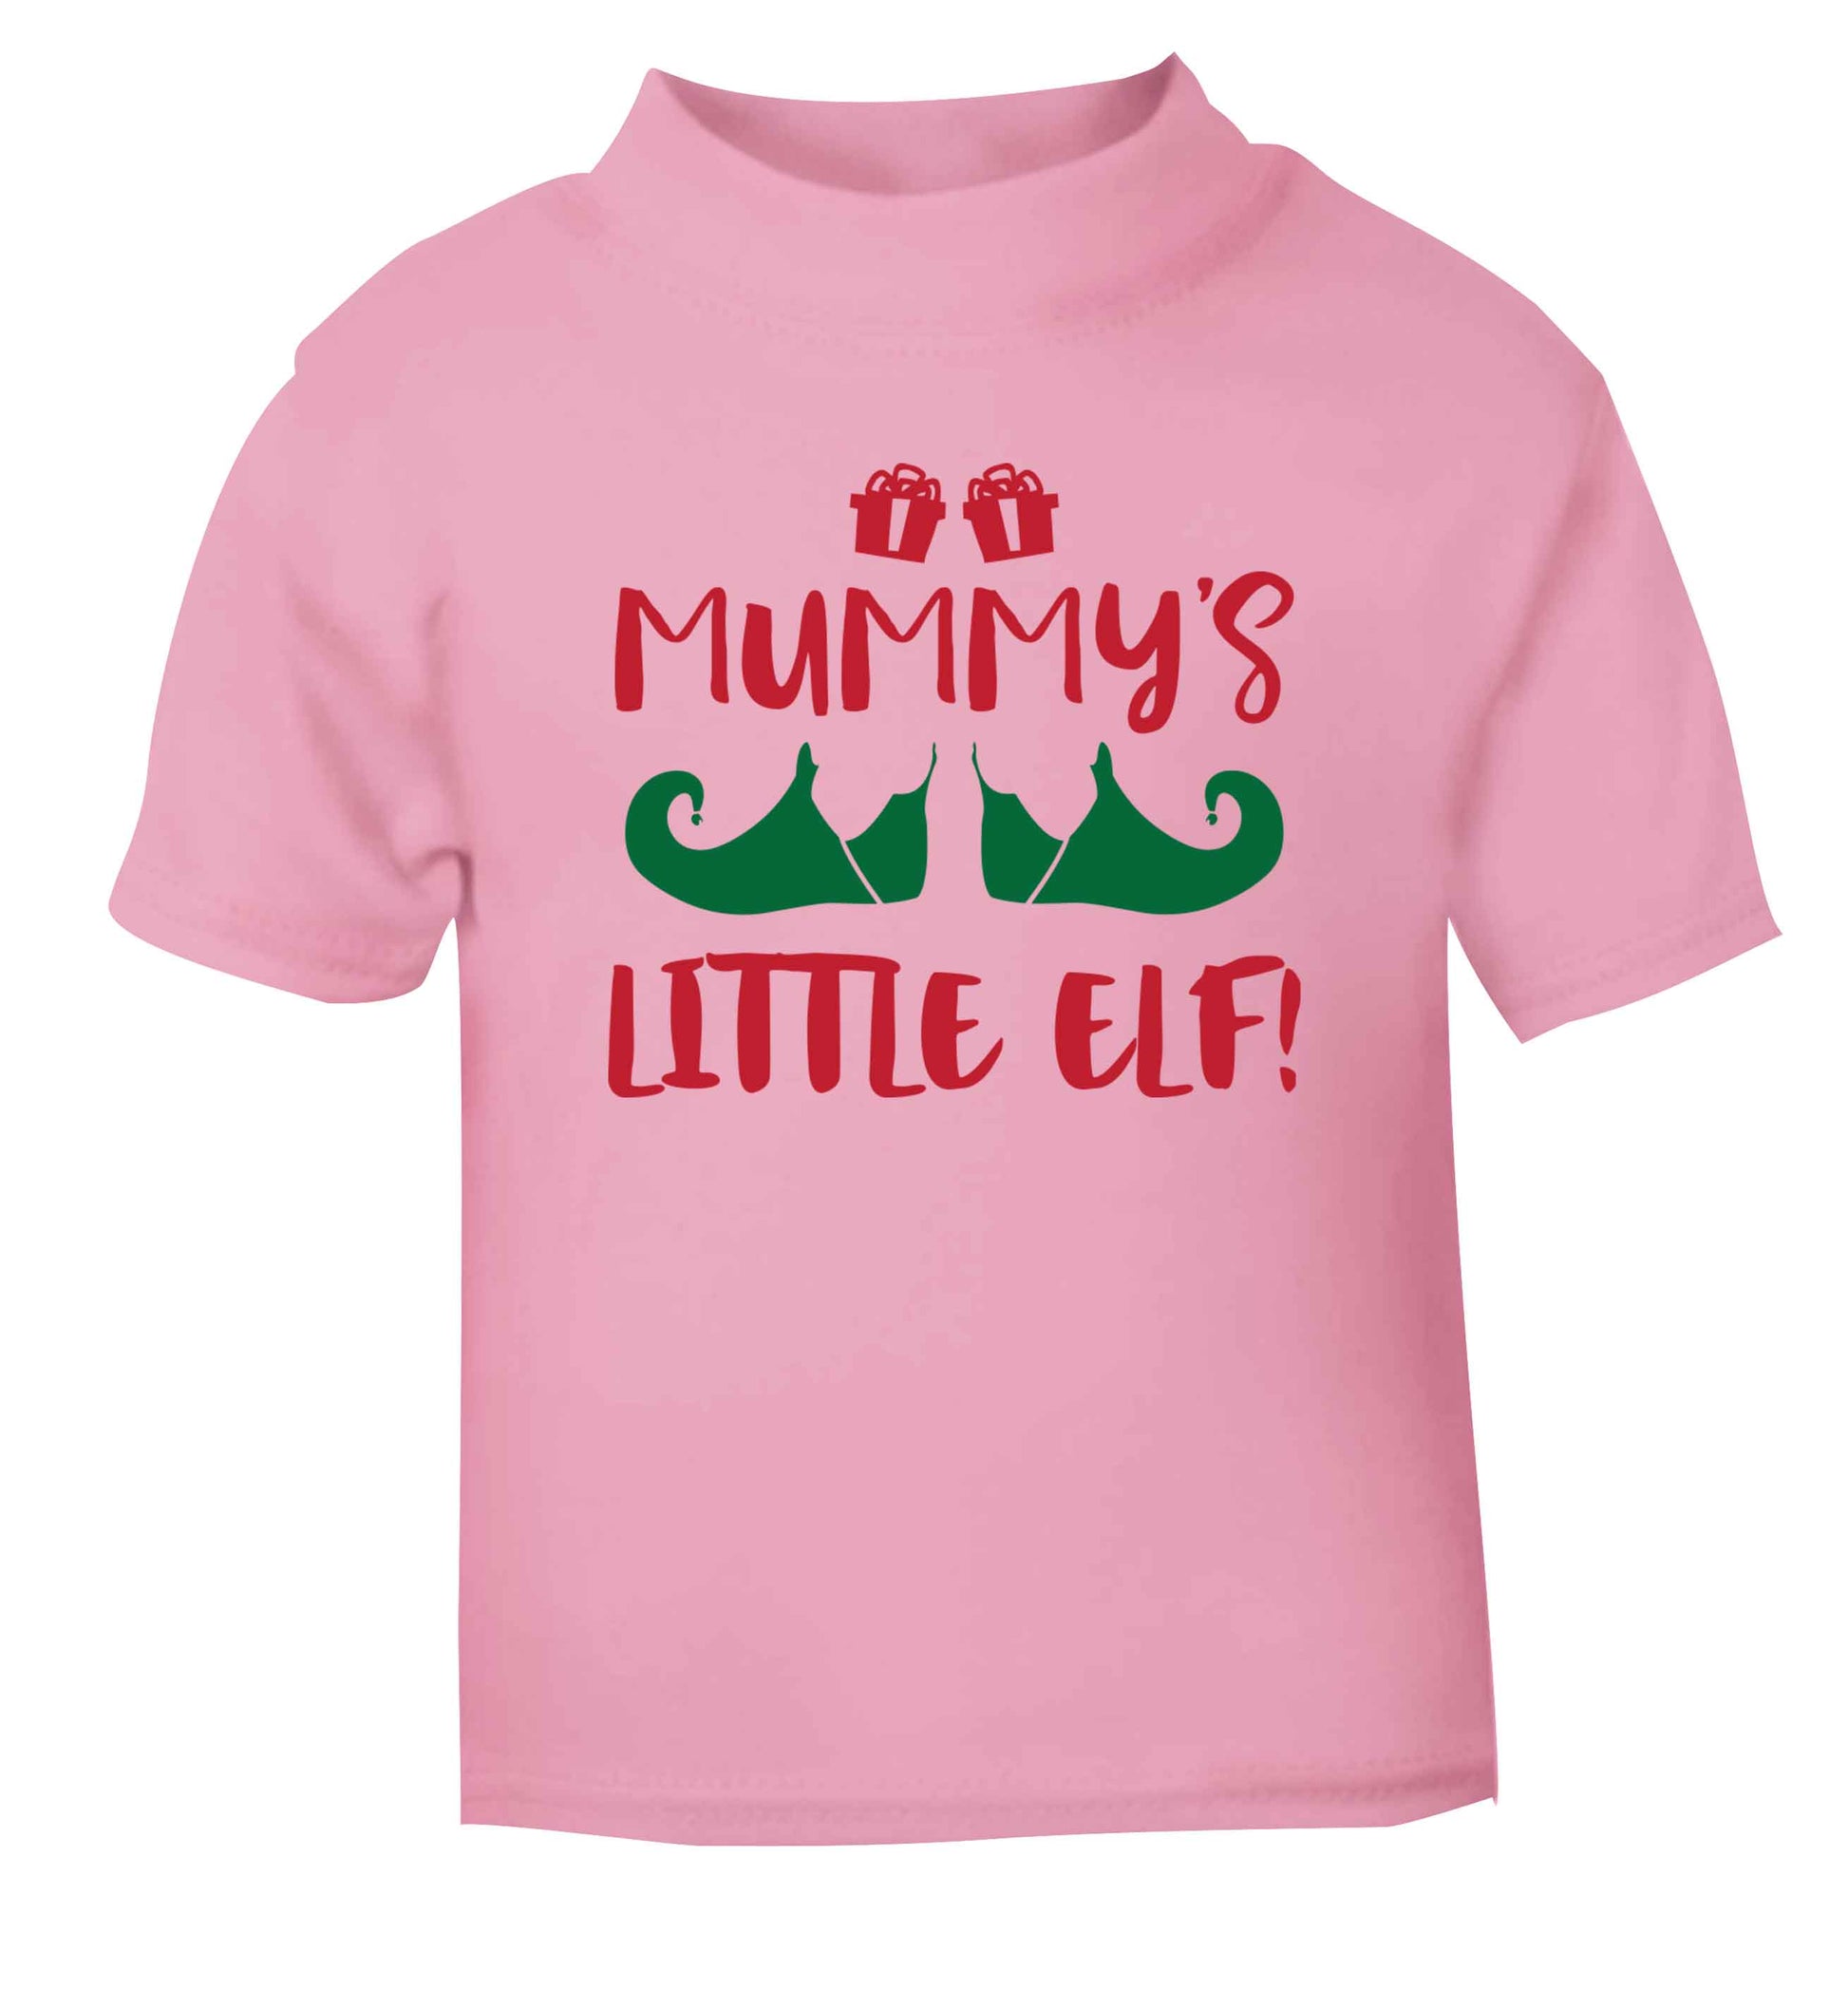 Mummy's little elf light pink Baby Toddler Tshirt 2 Years